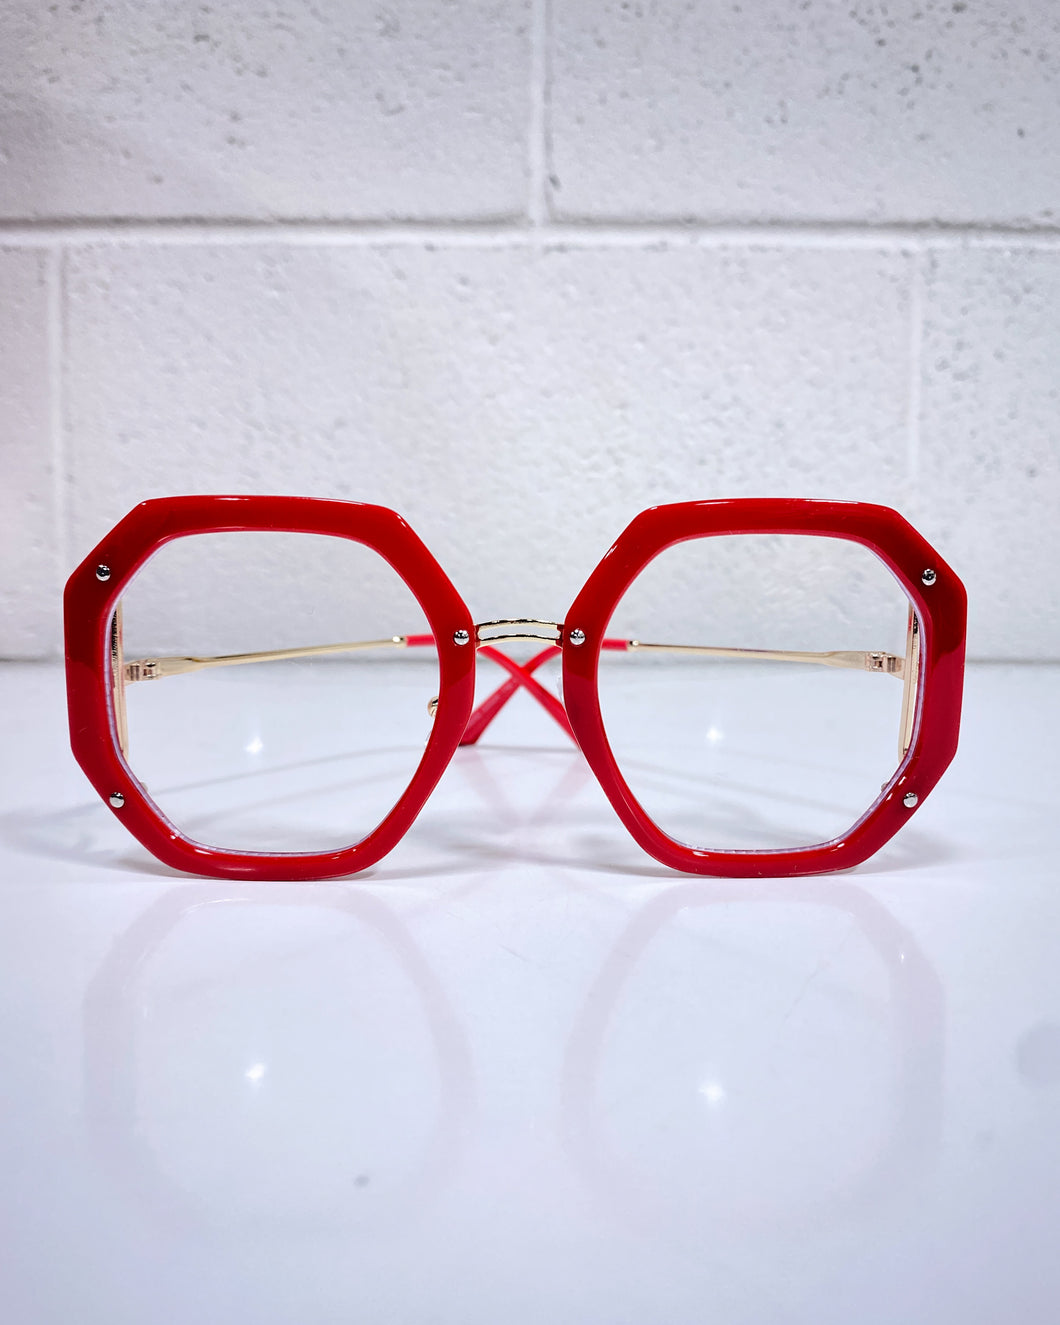 Red Fashion Glasses